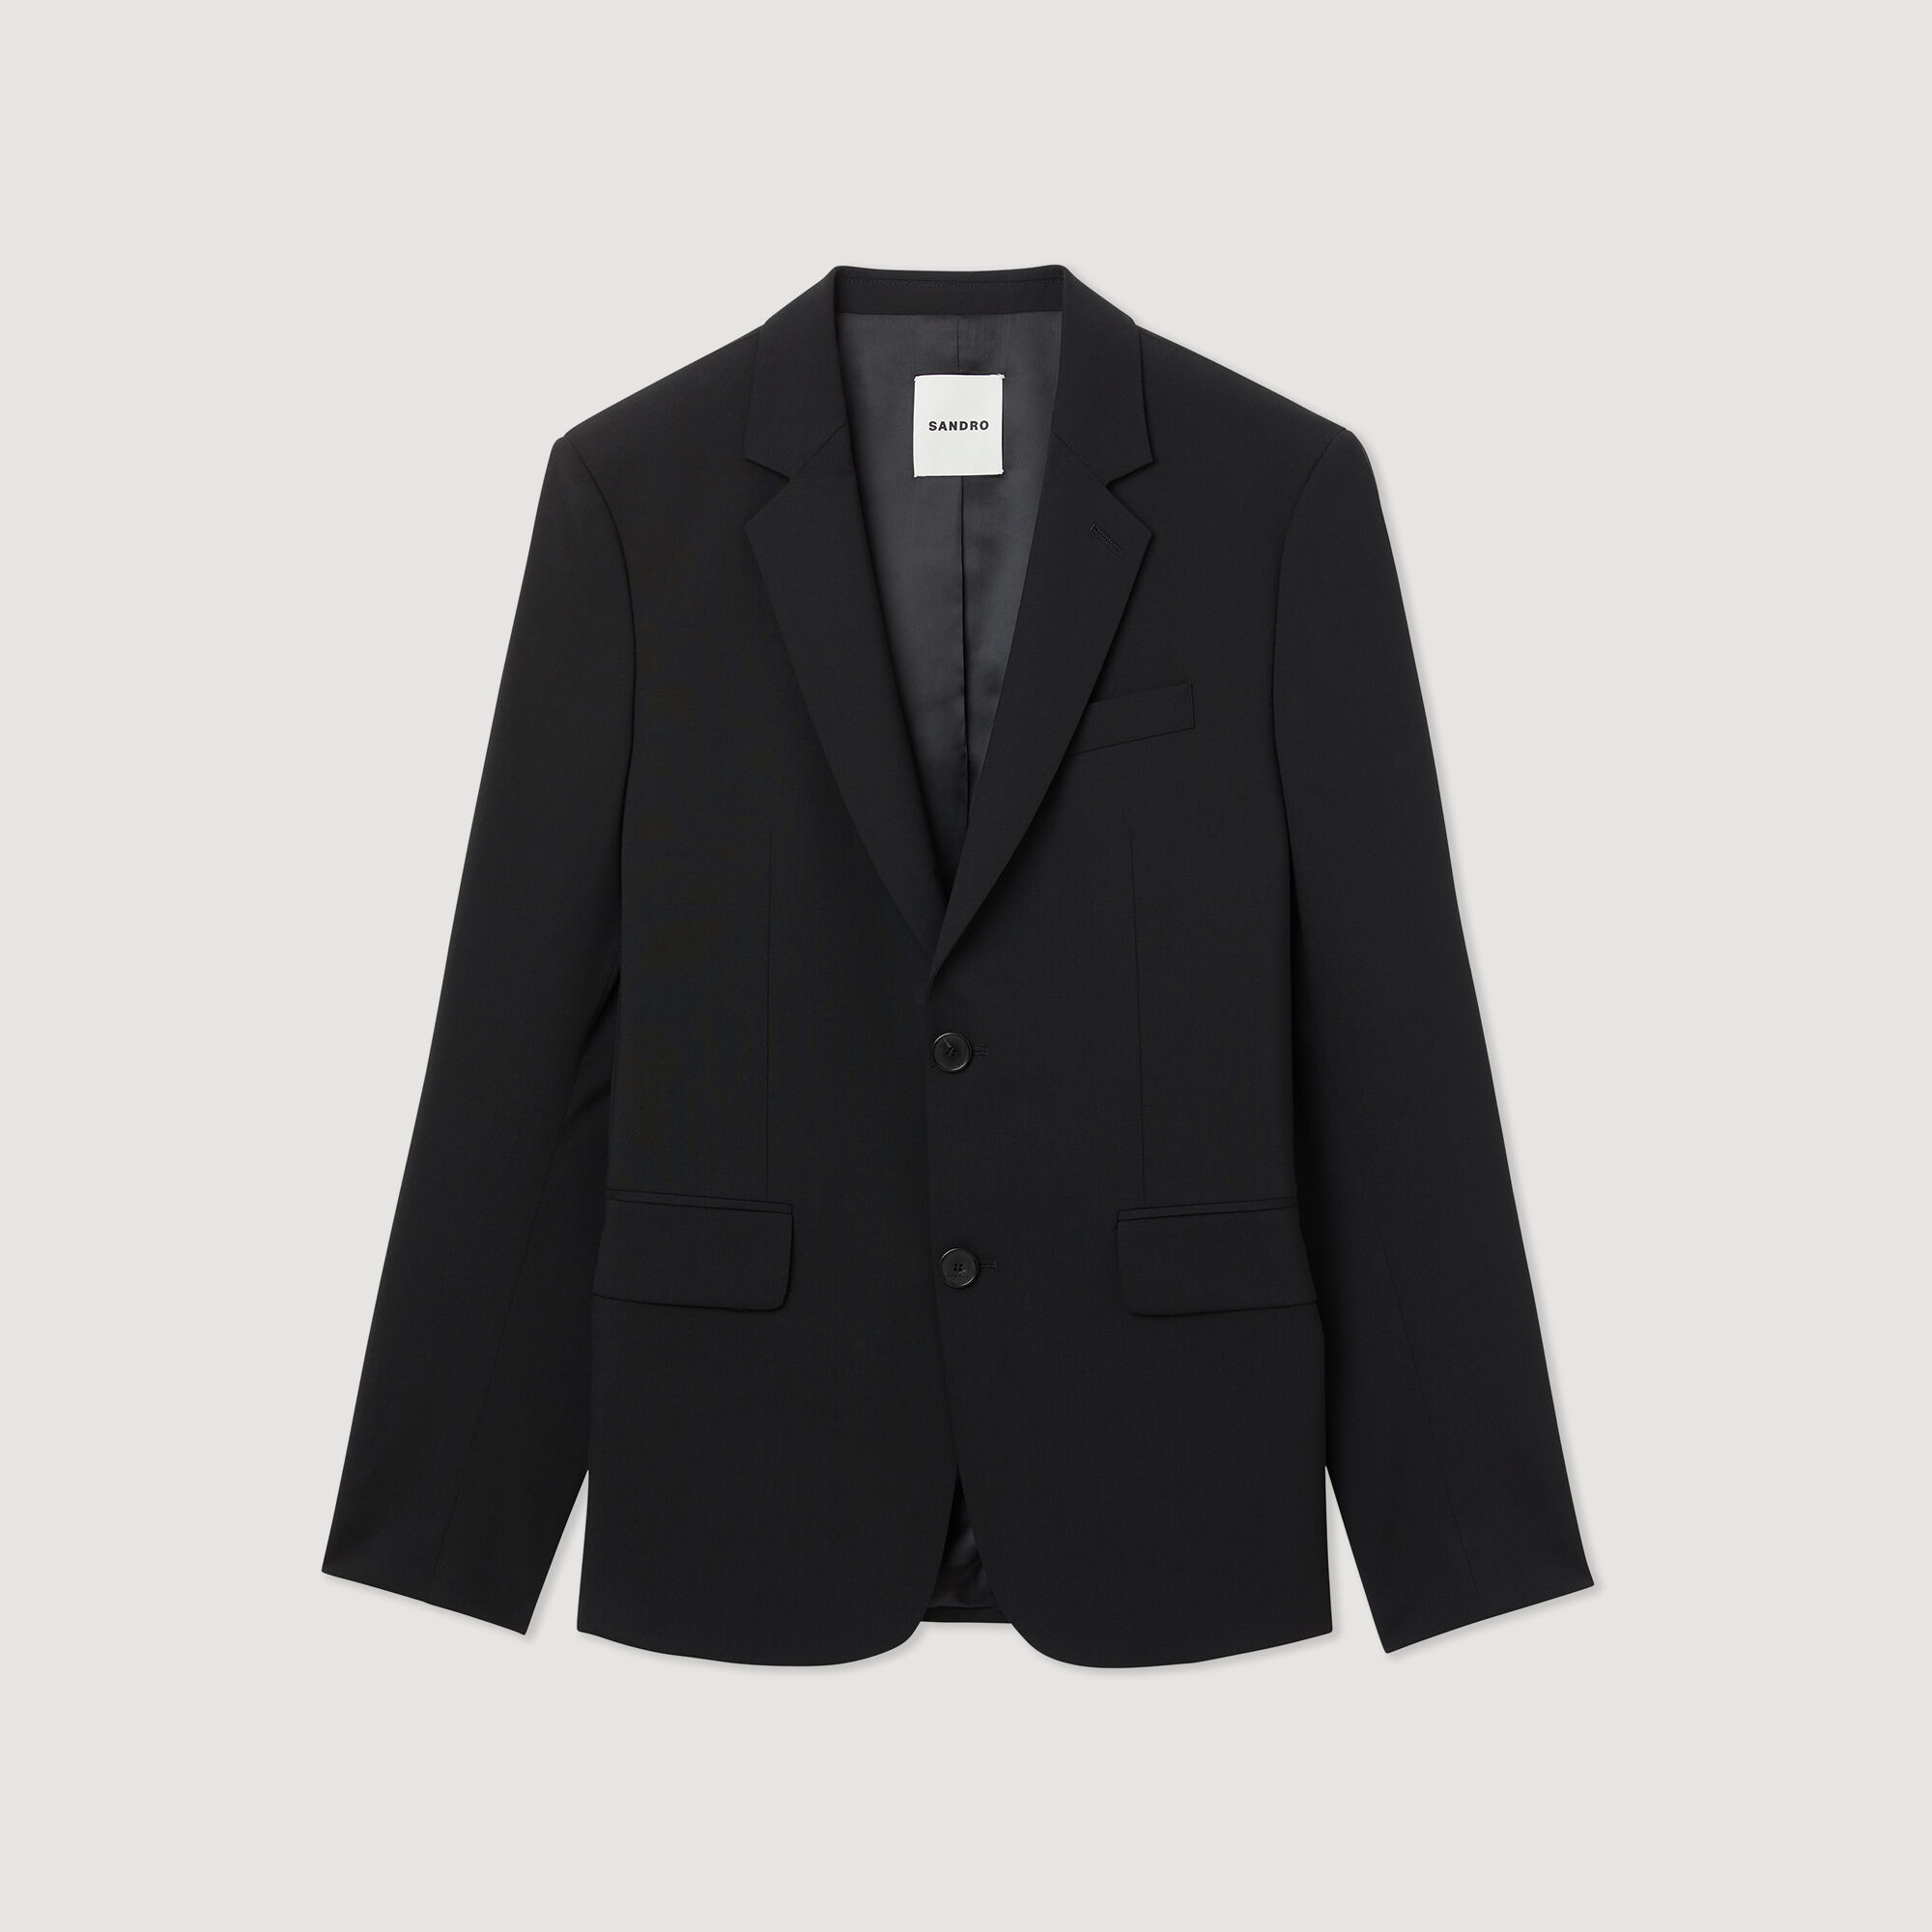 Autumn Plaid Mens Suit Jacket & Blazer Slim Fit Formal Wear With One Button  & Trousers Set From Wochanmei, $69.73 | DHgate.Com